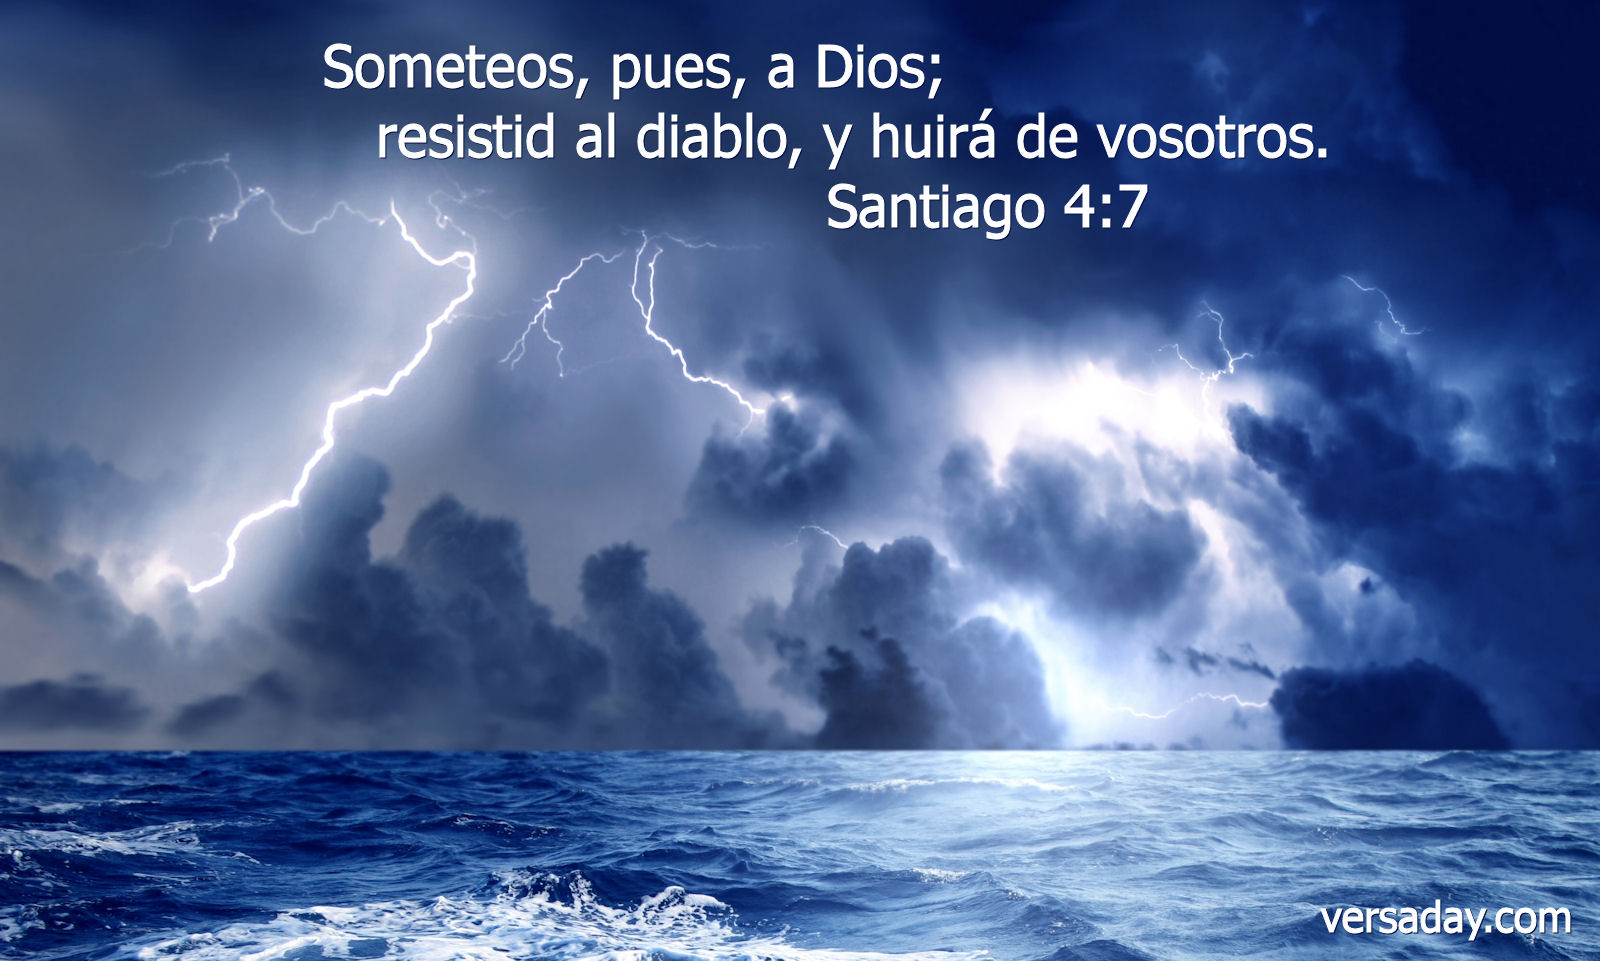 Santiago 4:7